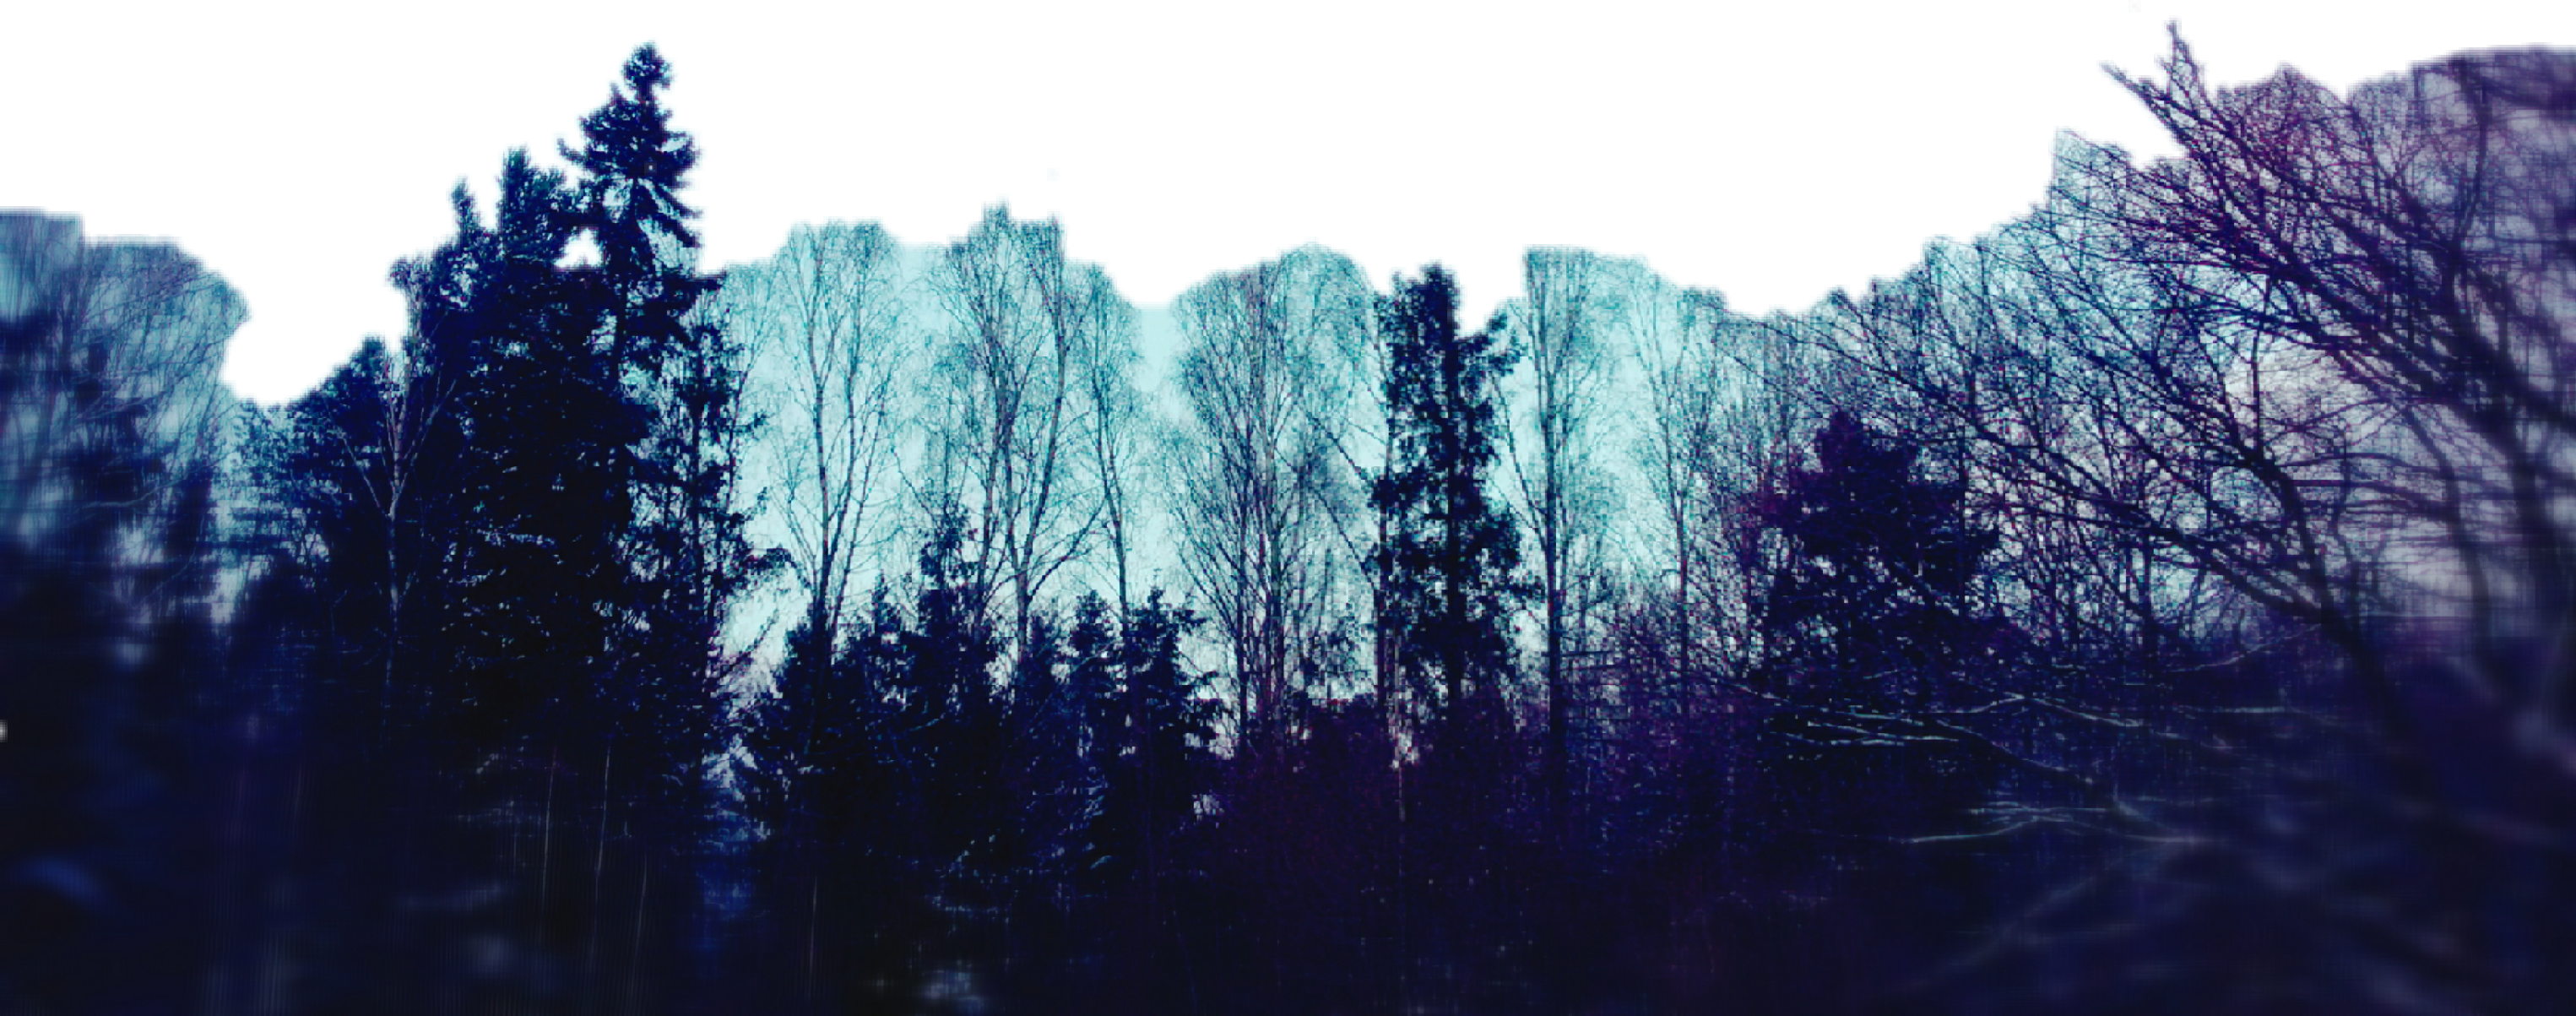 Picsart Forest PNG Transparent Image